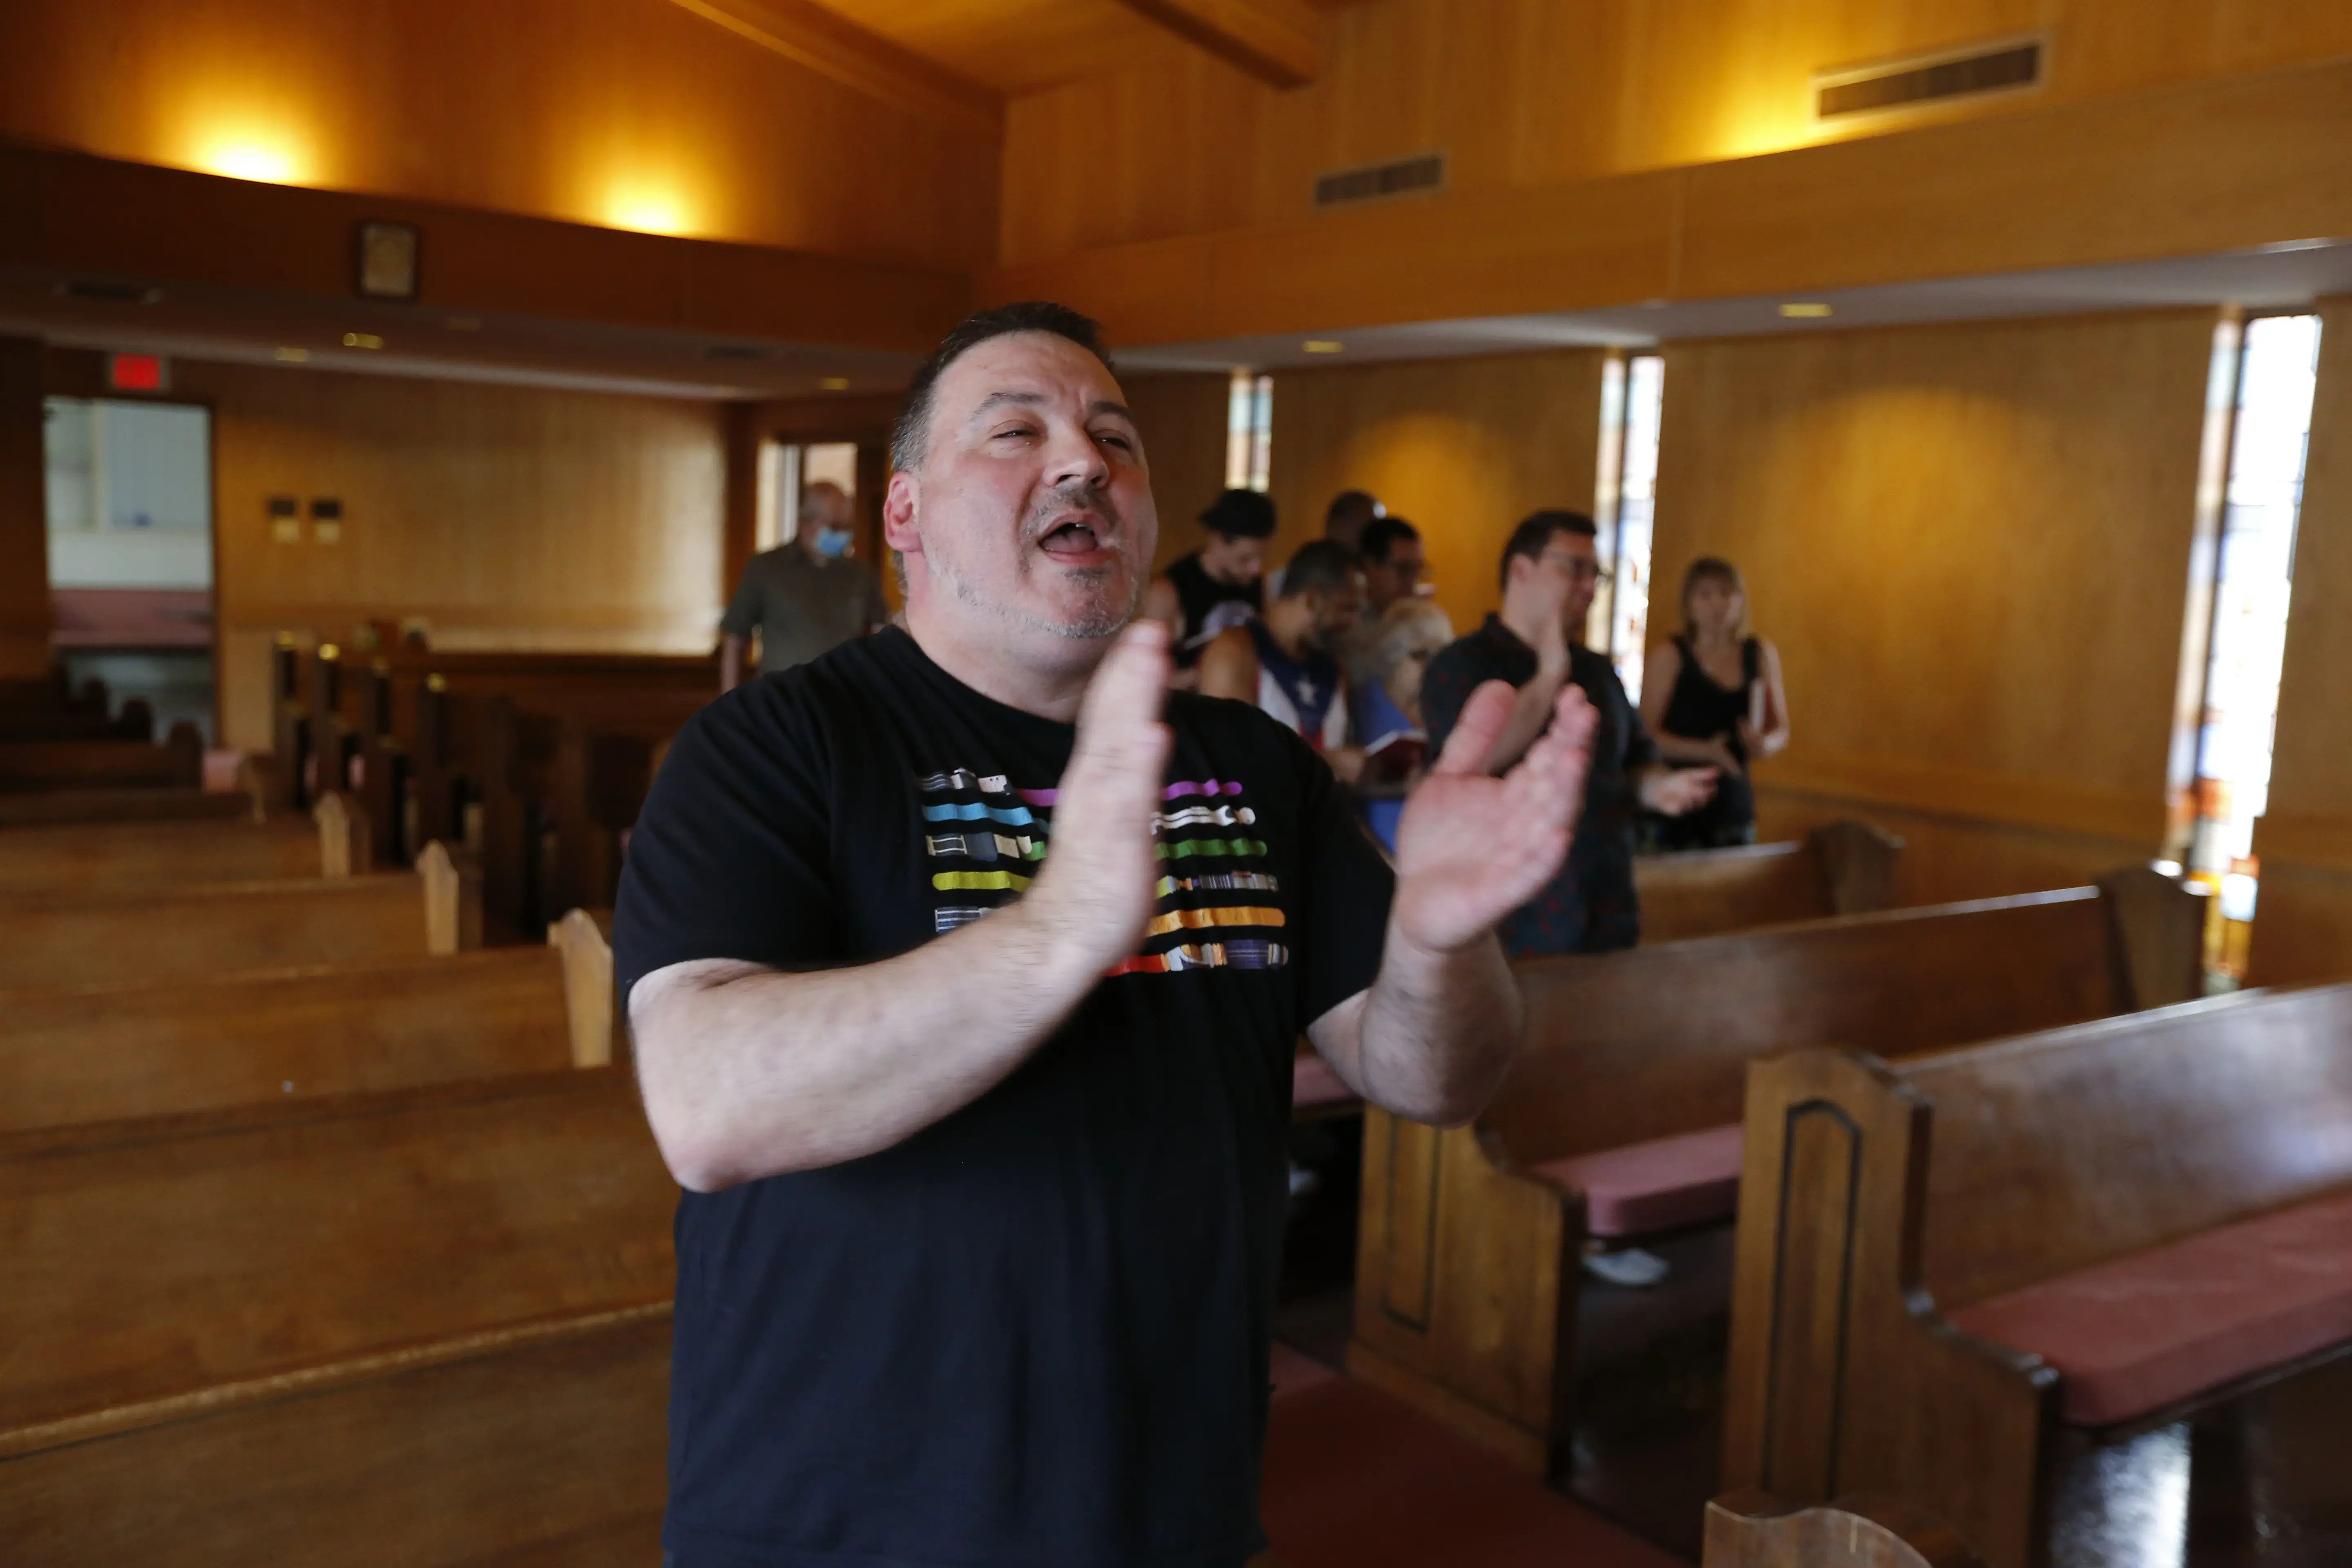 A pastor sings in church